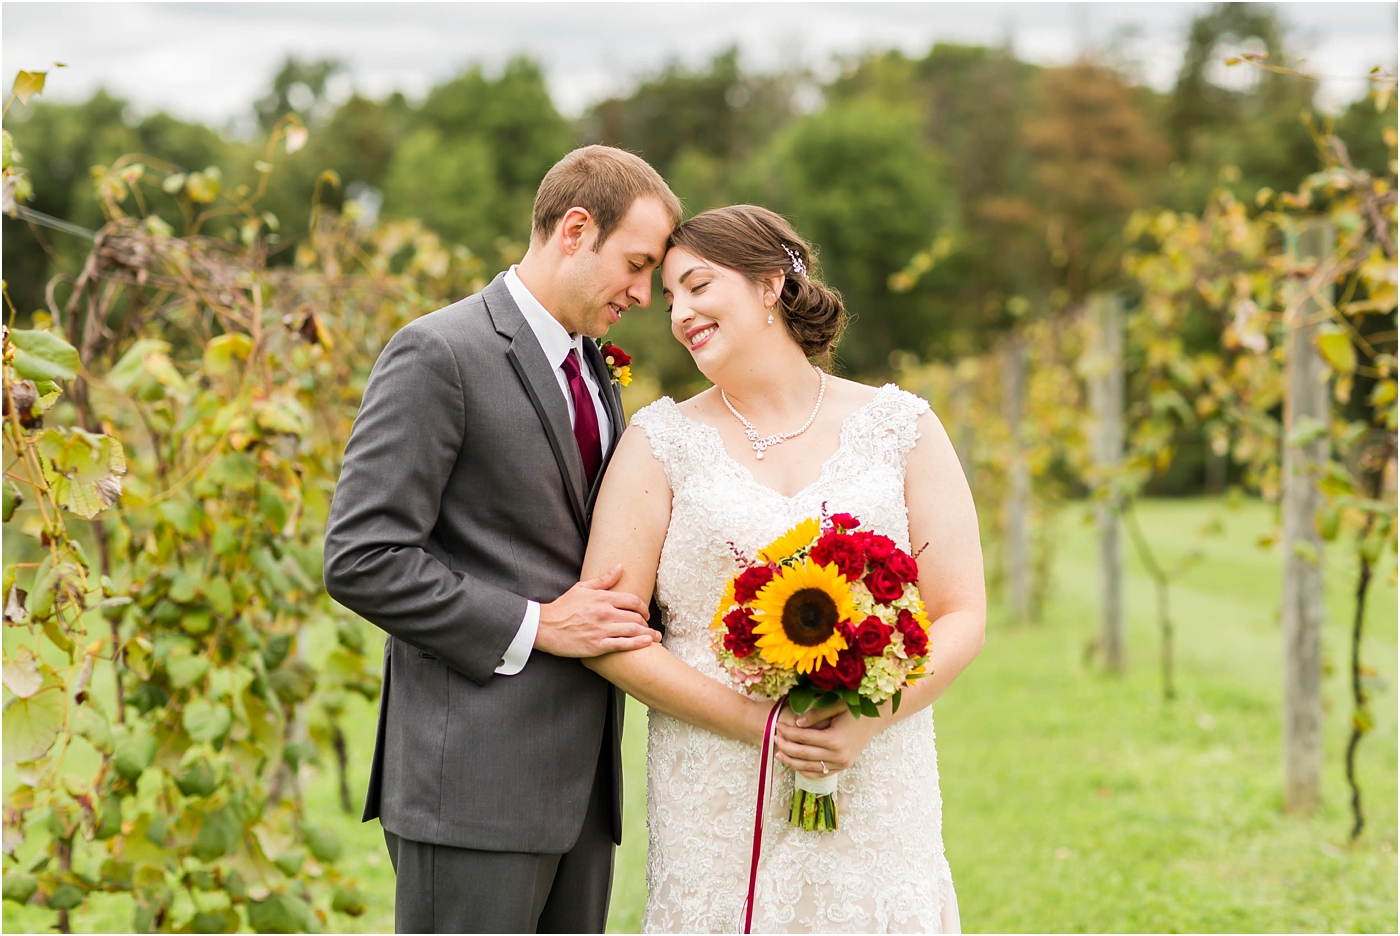 Loren Jackson Photography,Photographer Akron Ohio,Tool Shed at Breitenbach Winery Wedding,cleveland wedding photography,